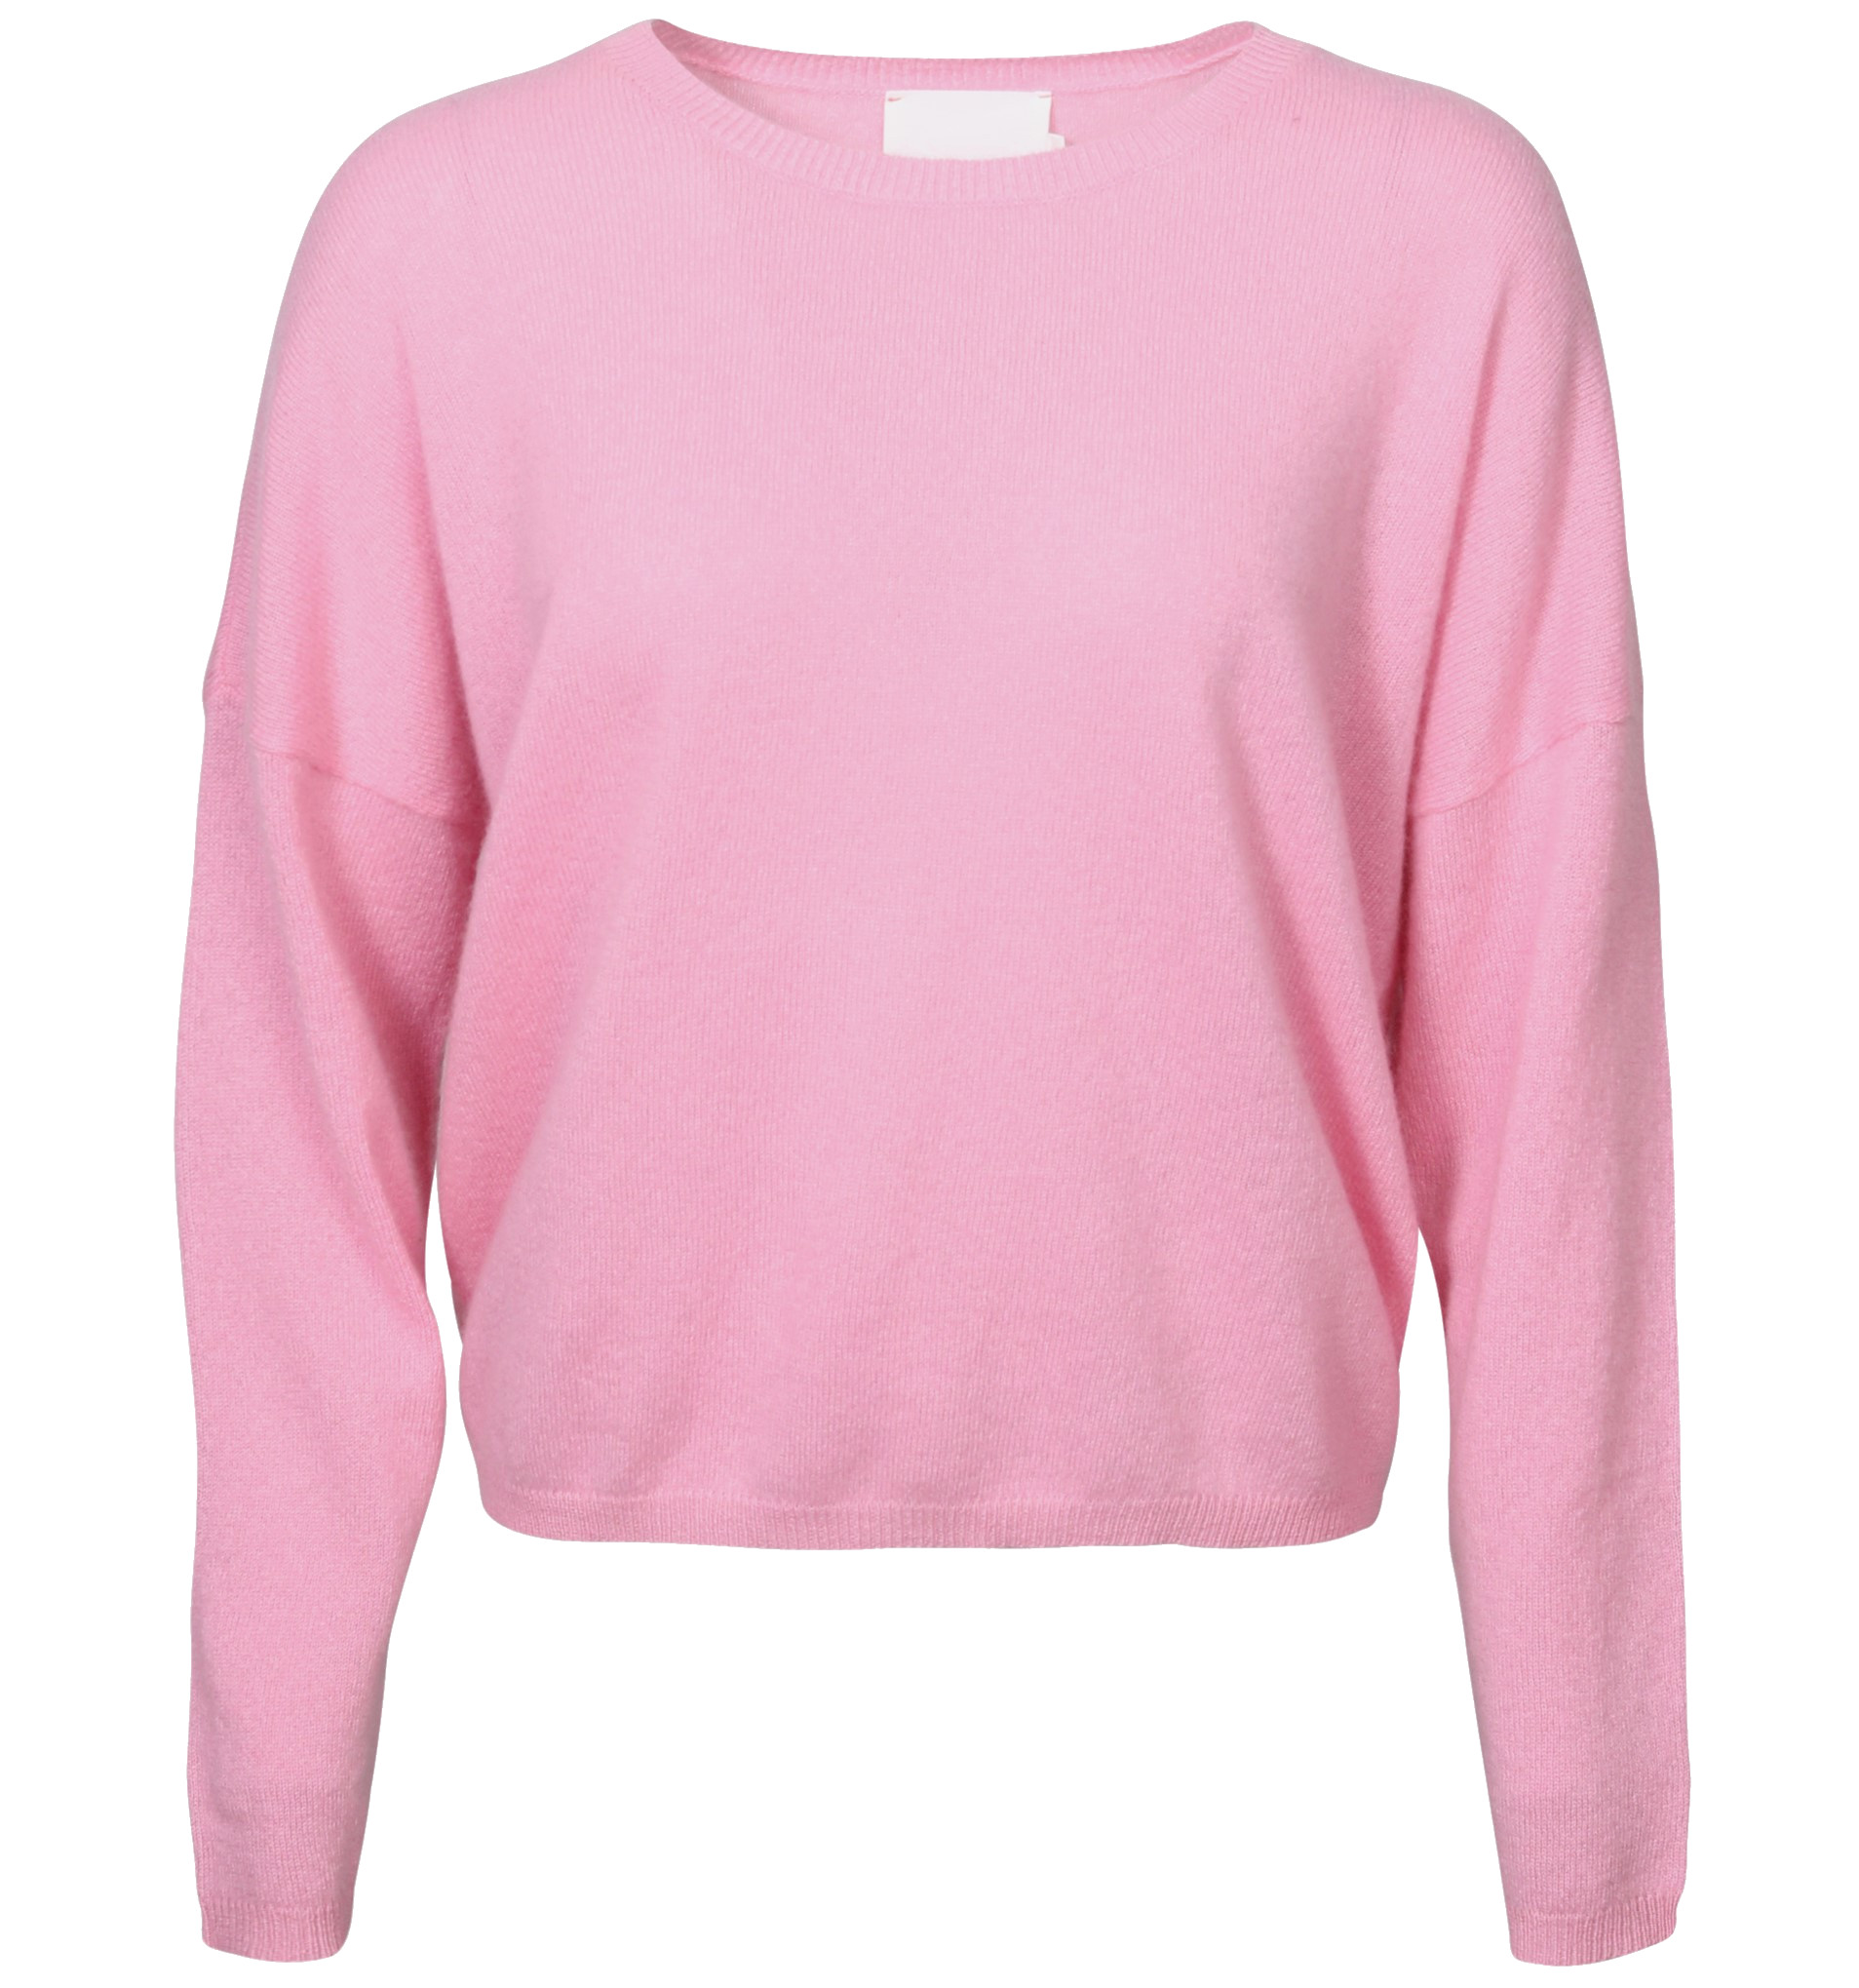 ABSOLUT CASHMERE Round Neck Sweater Kaira in Light Pink